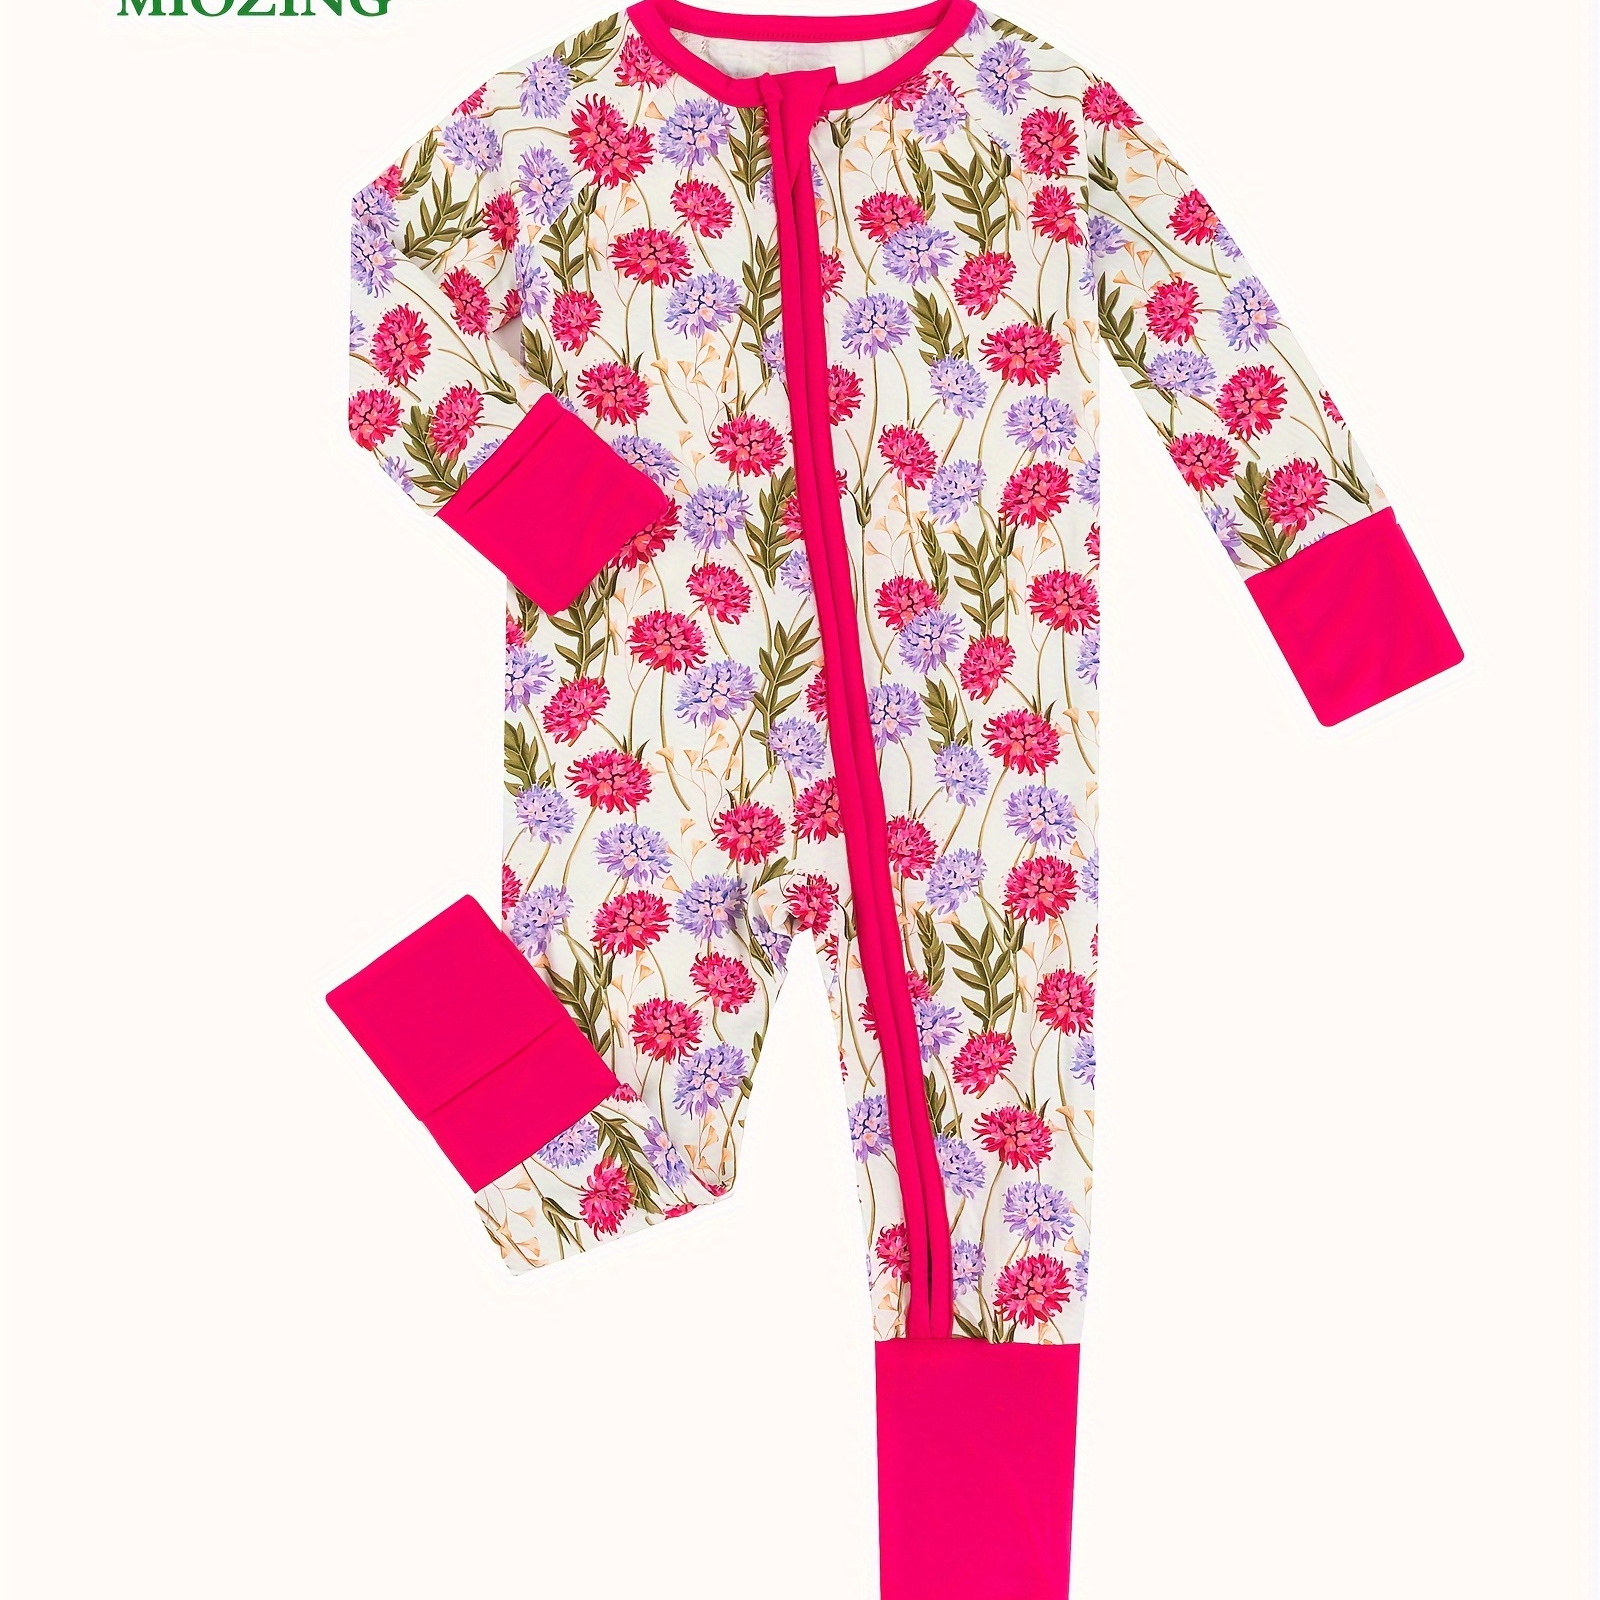 

Miozing Bamboo Fiber Bodysuit For Baby, Cartoon Color Clash Flower Pattern Long Sleeve Onesie, Infant & Toddler Girl's Romper